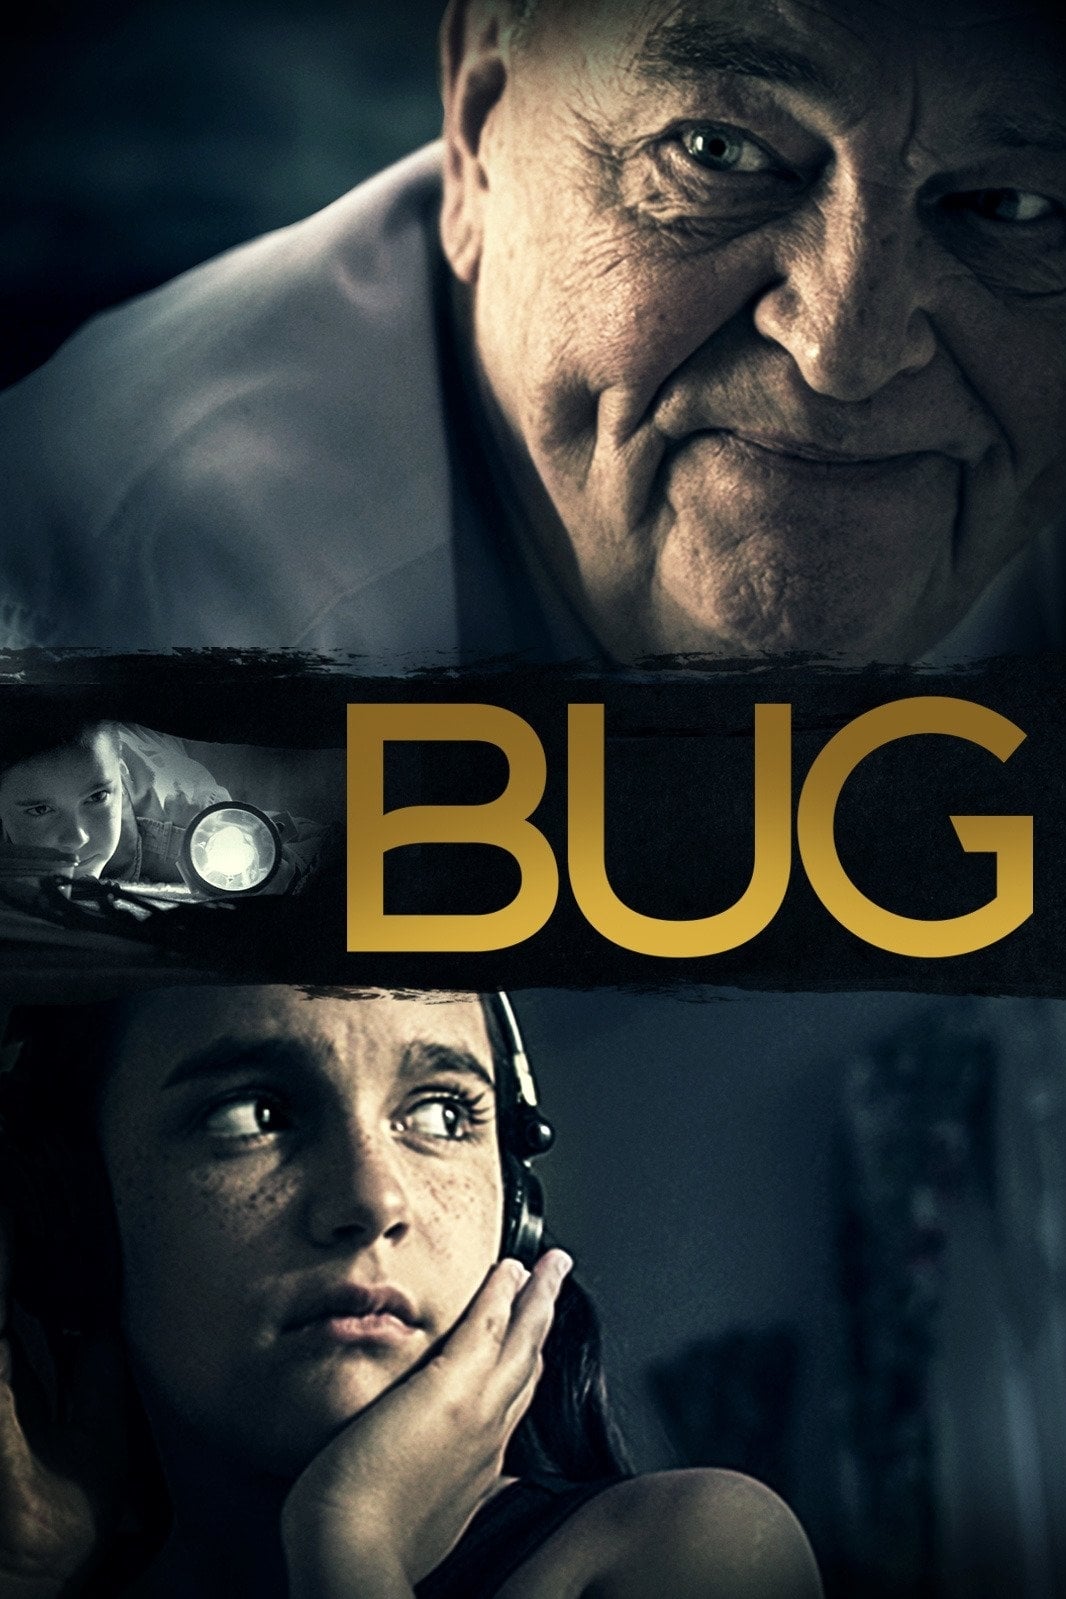 Bug film